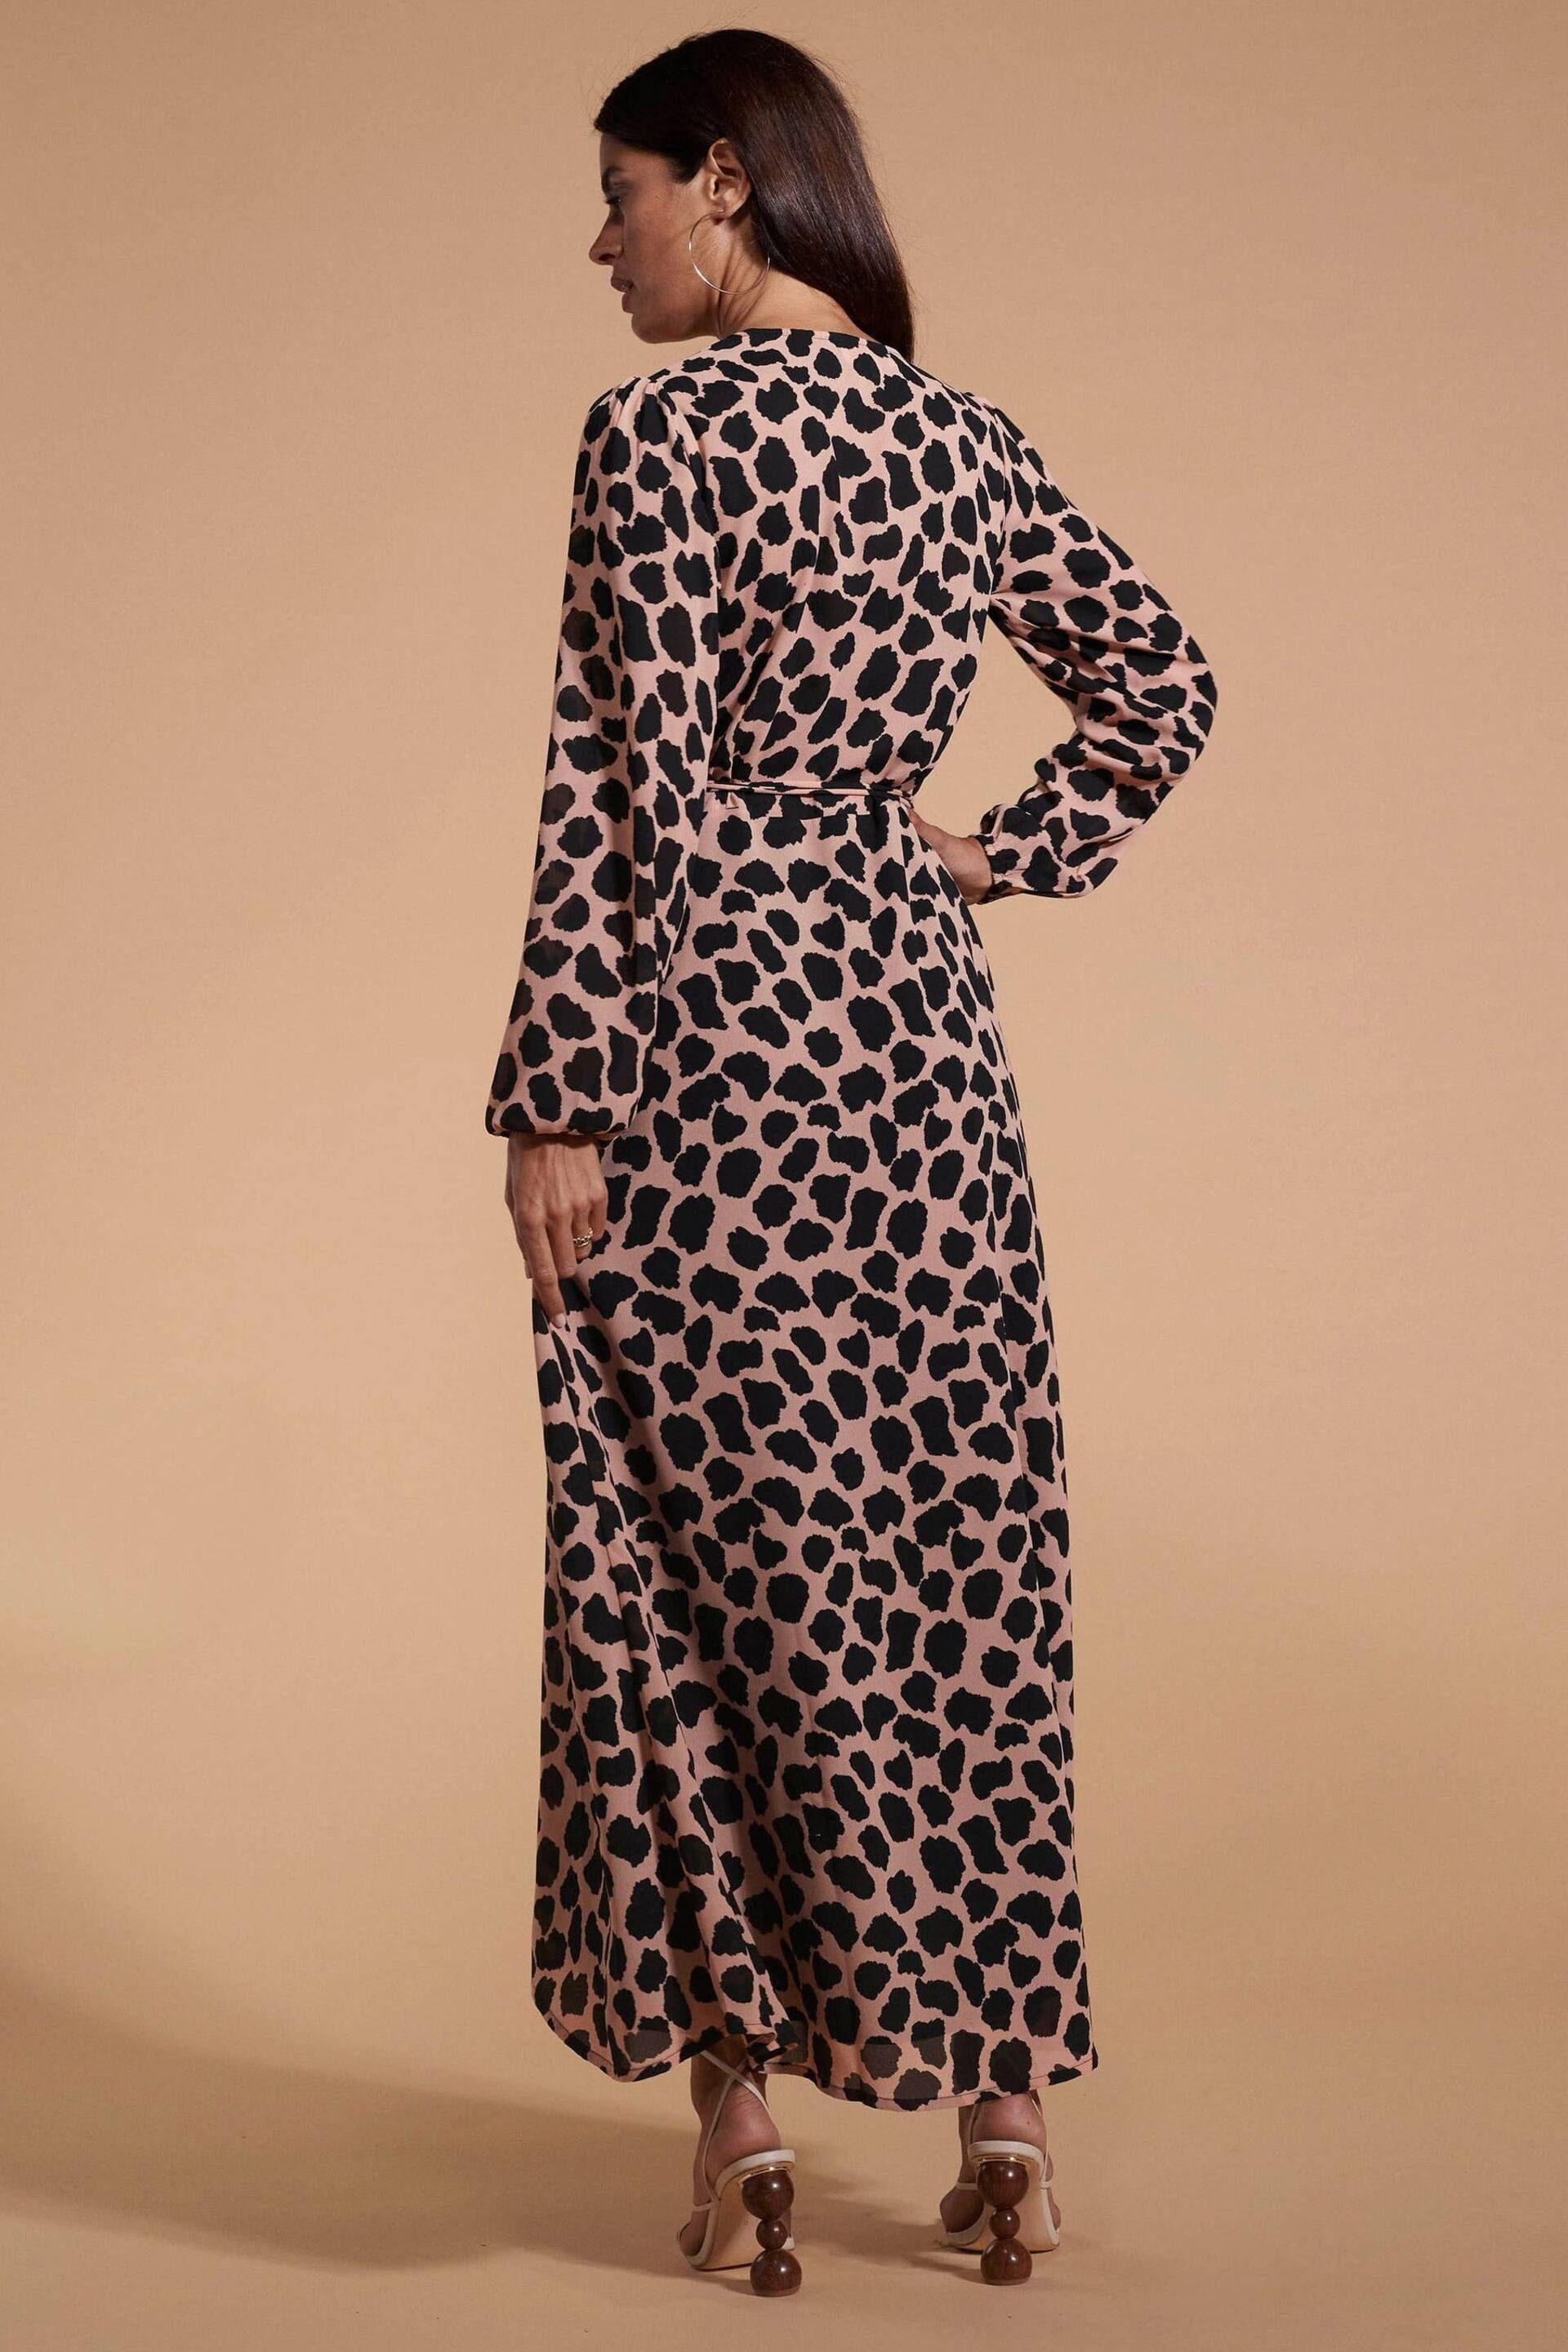 Dancing Leopard Jagger Maxi Dress - Image 2 of 4